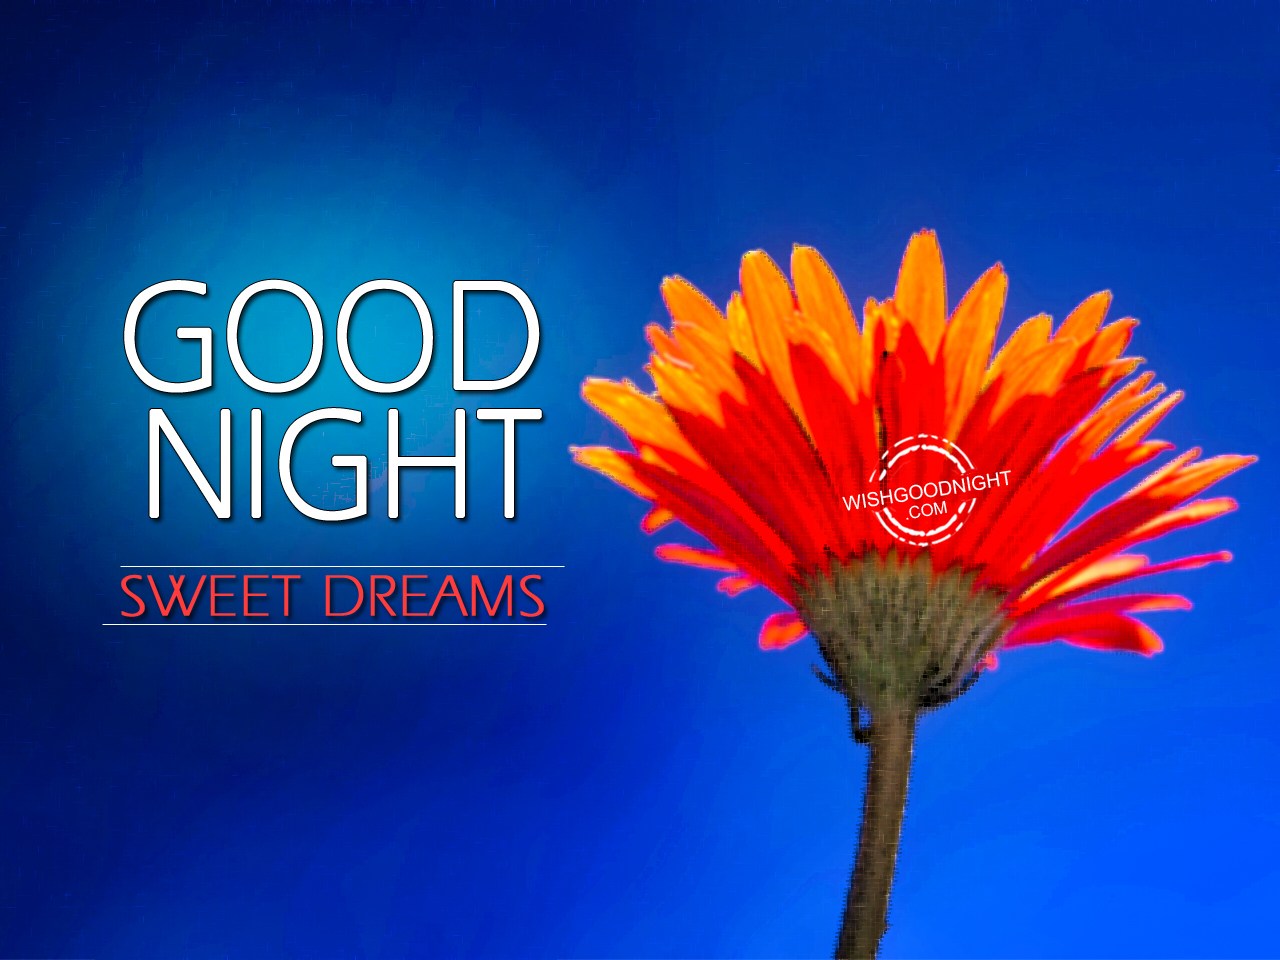 Good Night, Sweet Dreams Image.